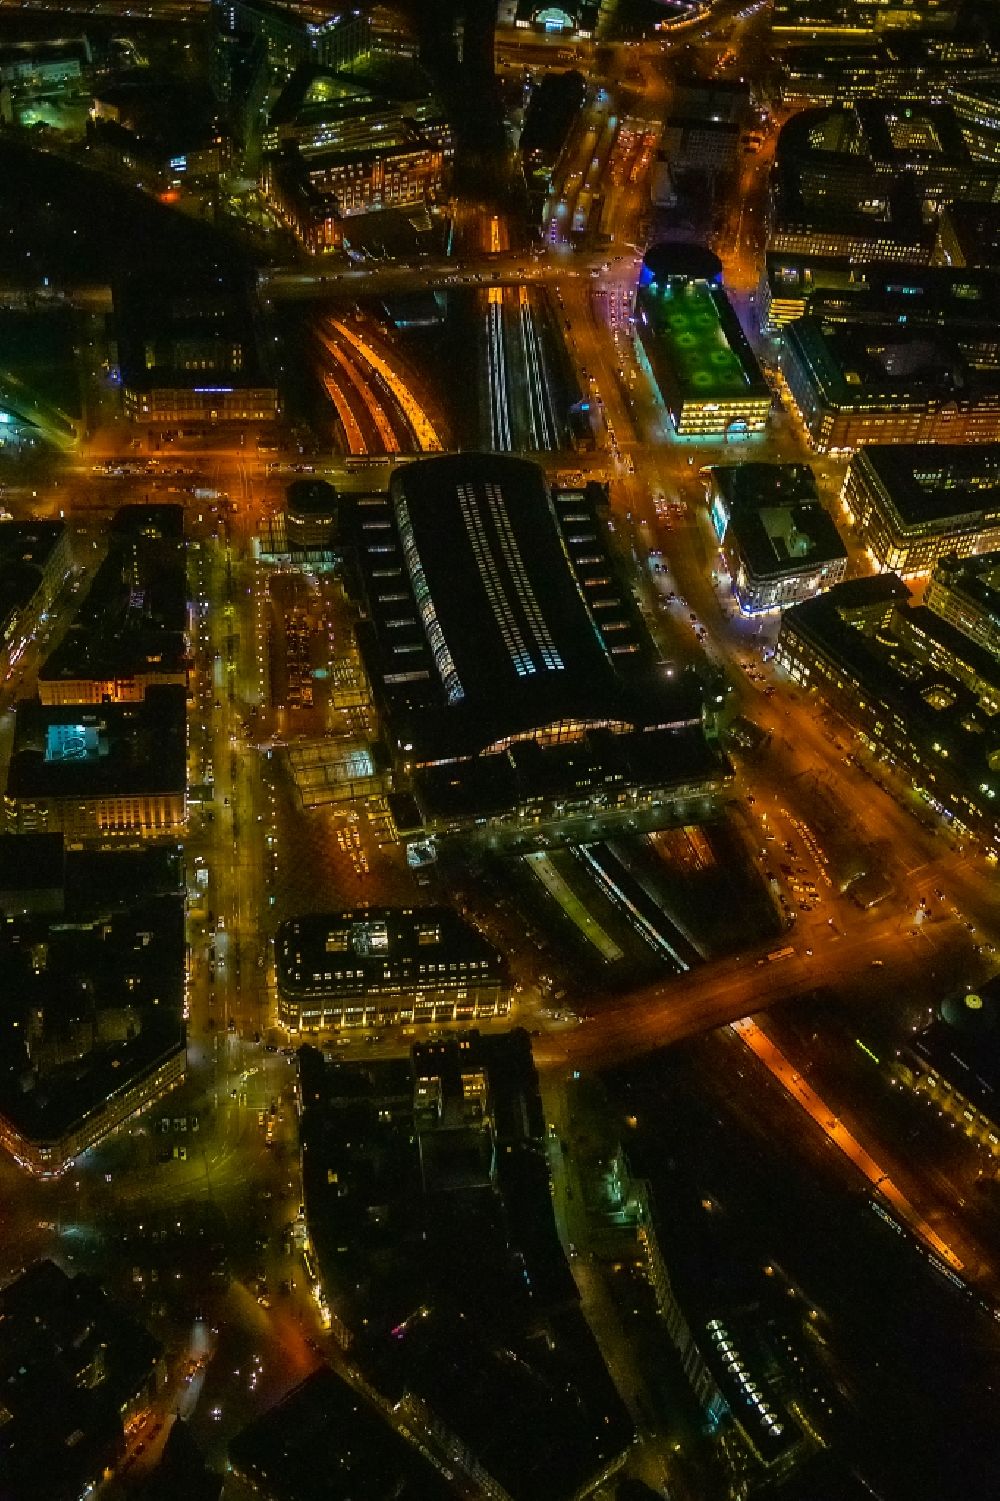 Aerial photograph at night Hamburg - Night lighting track progress and building of the main station of the railway in Hamburg, Germany